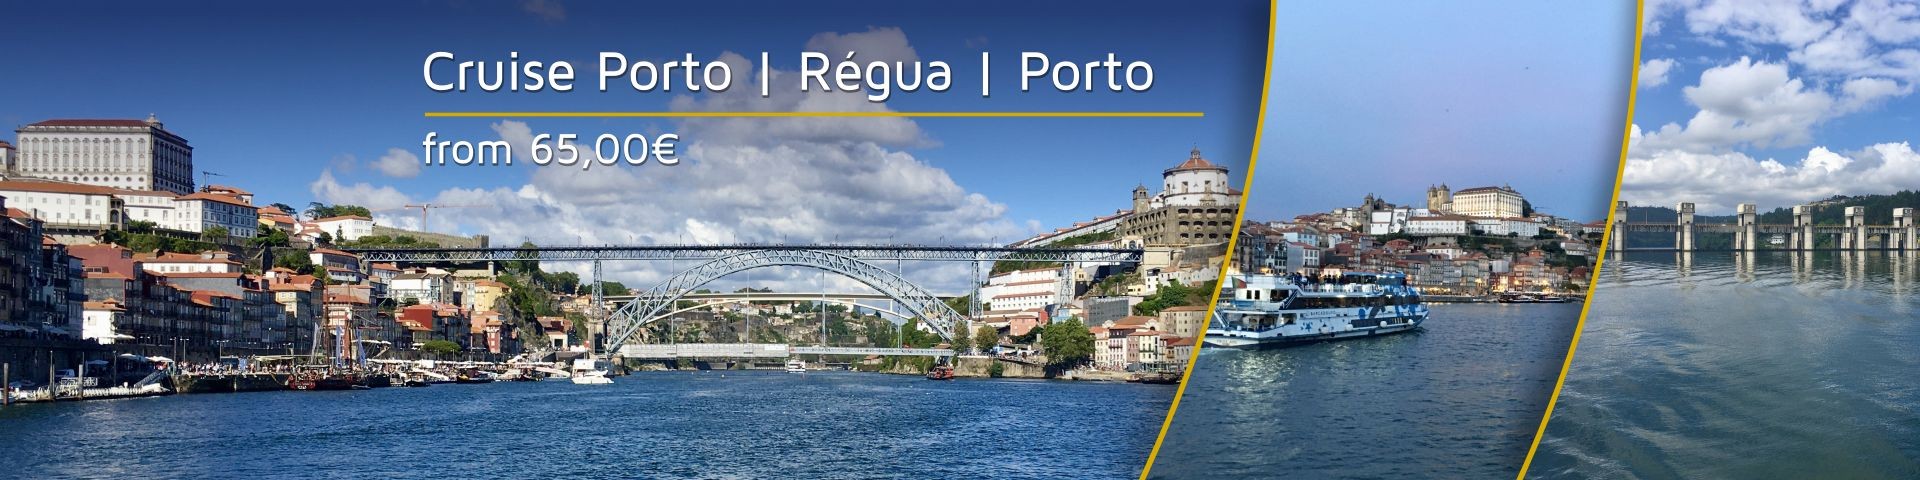 Cruise Porto Régua Porto